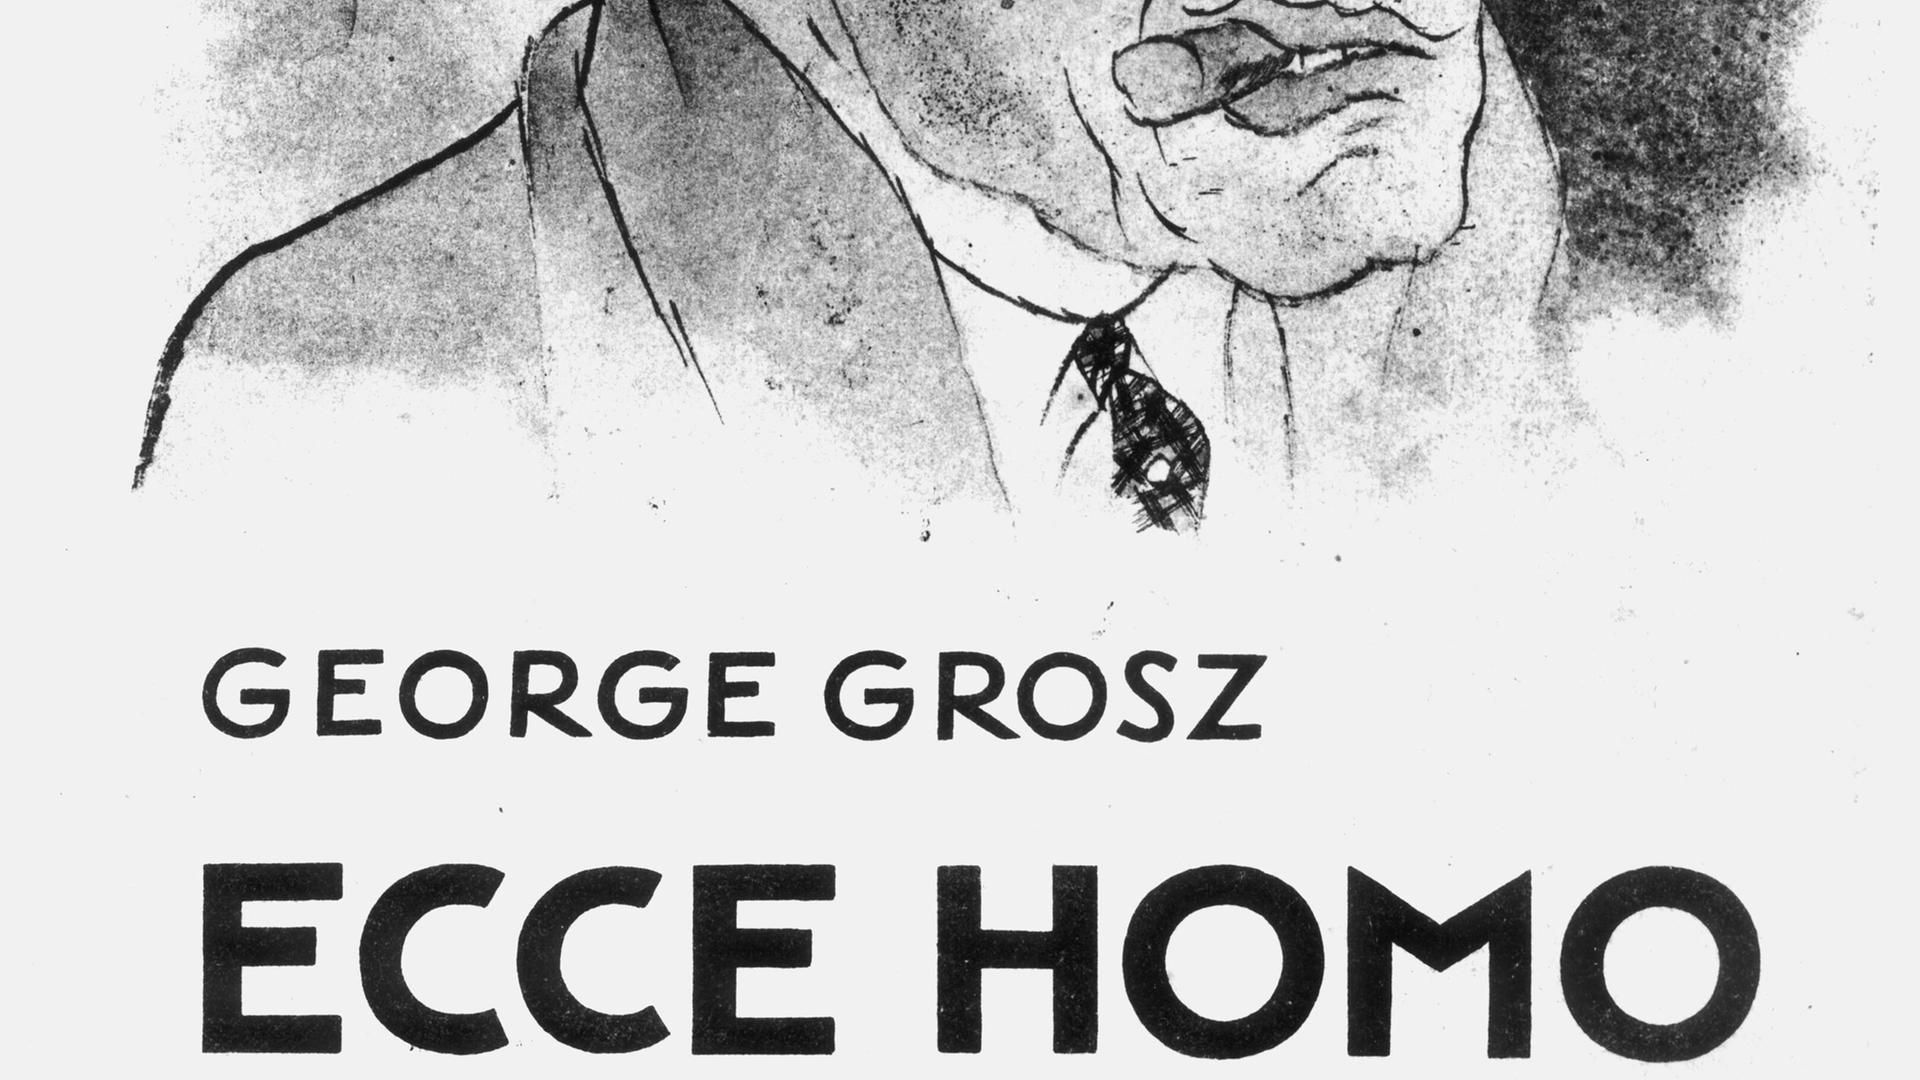 George Grosz grob unzüchtig? - Der "Ecce Homo"-Skandal